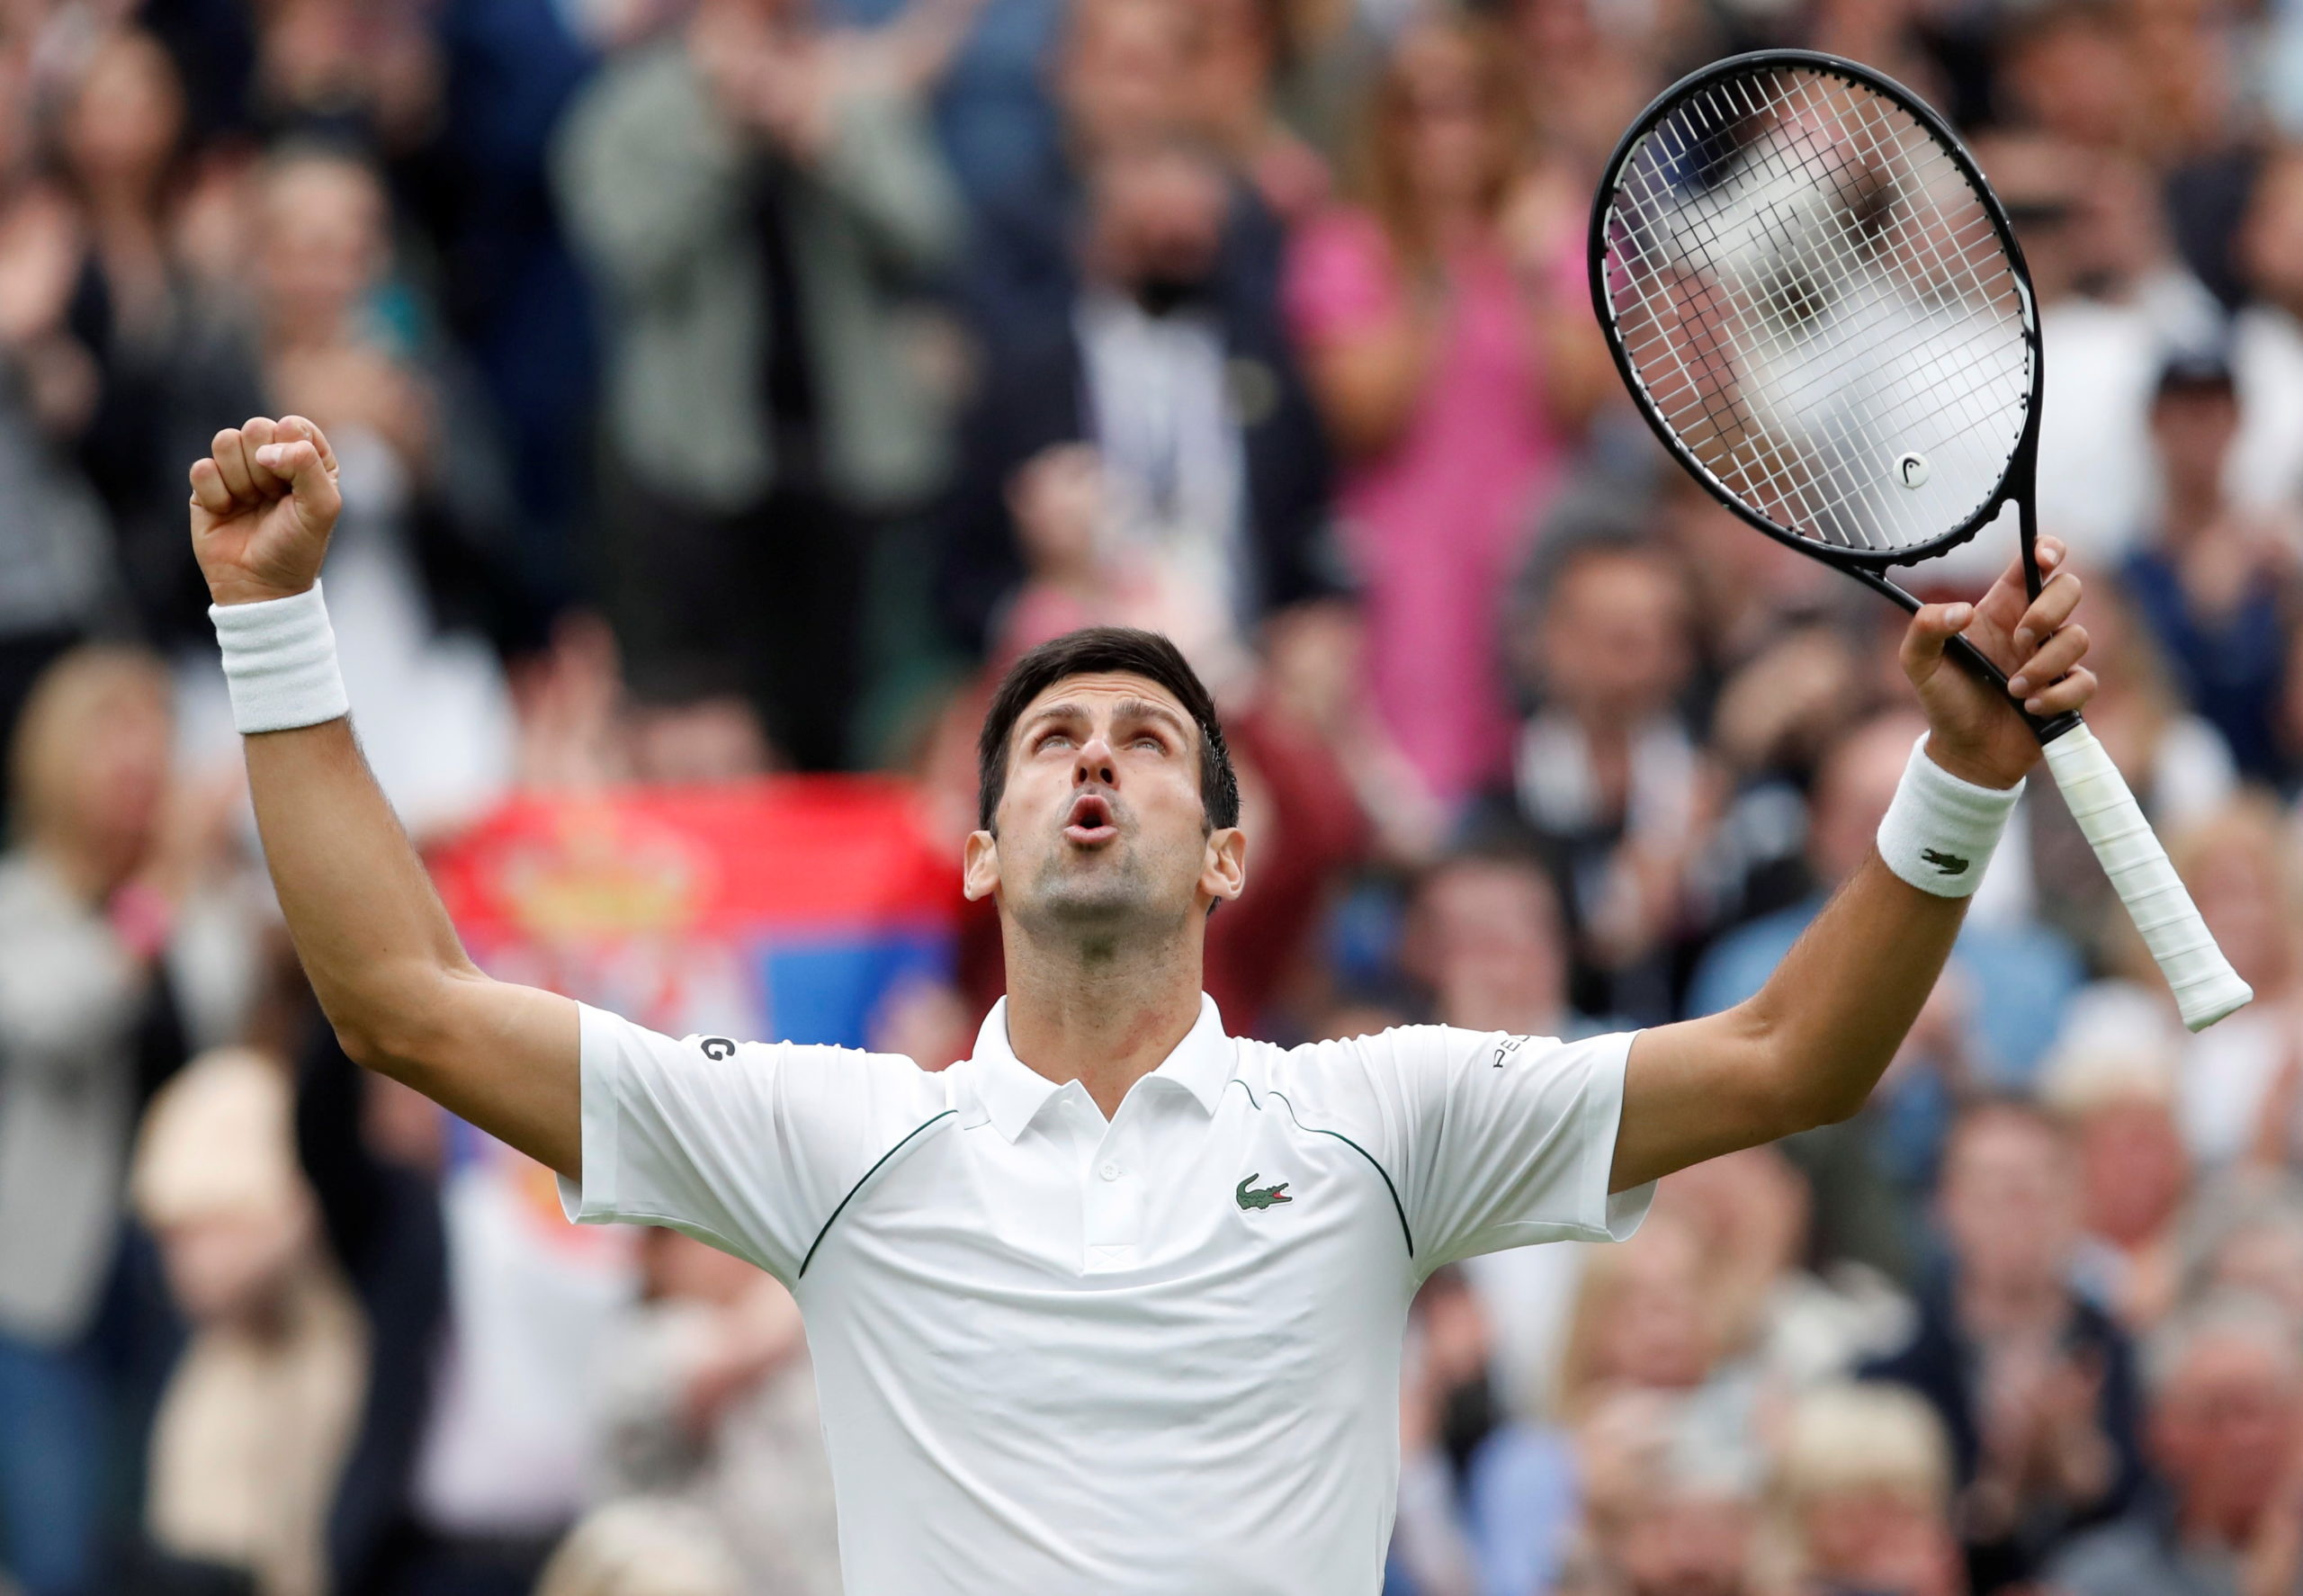 Serbia's Novak Djokovic celebrates winning his first round match against Britain's Jack Draper 